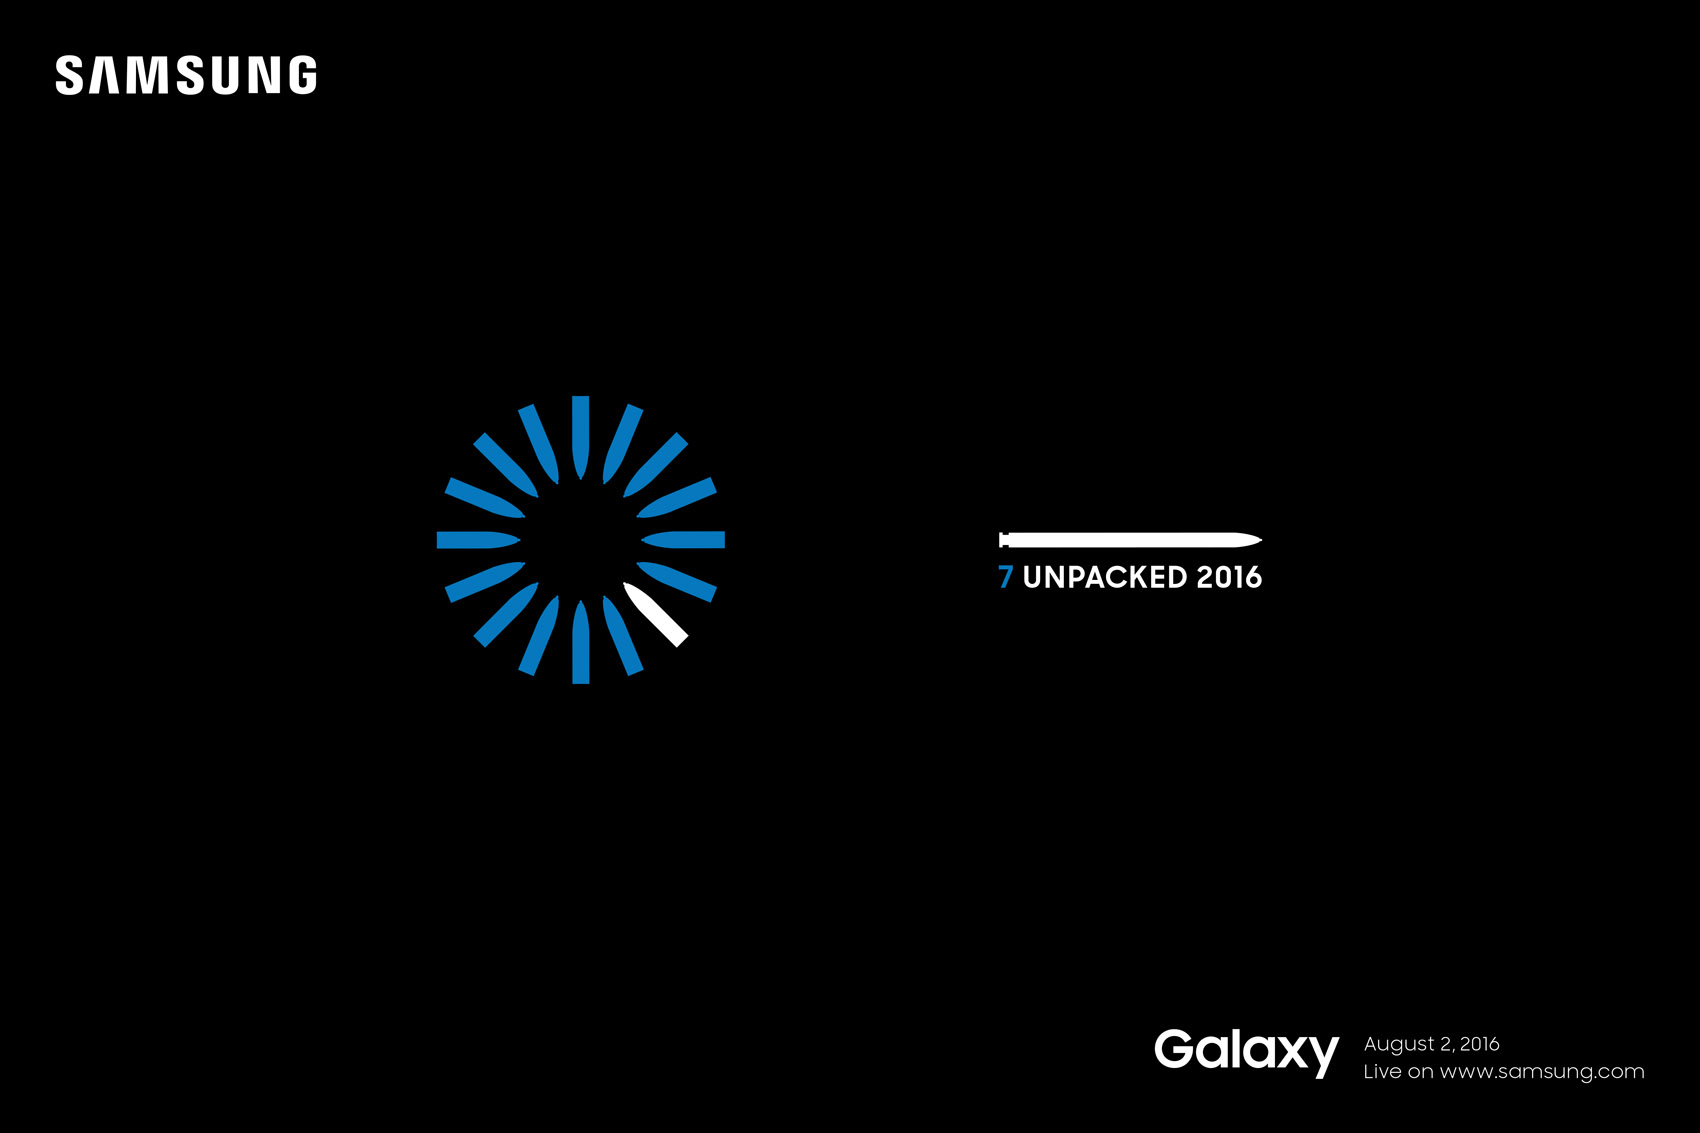 Samsung-Galaxy Note 7 event